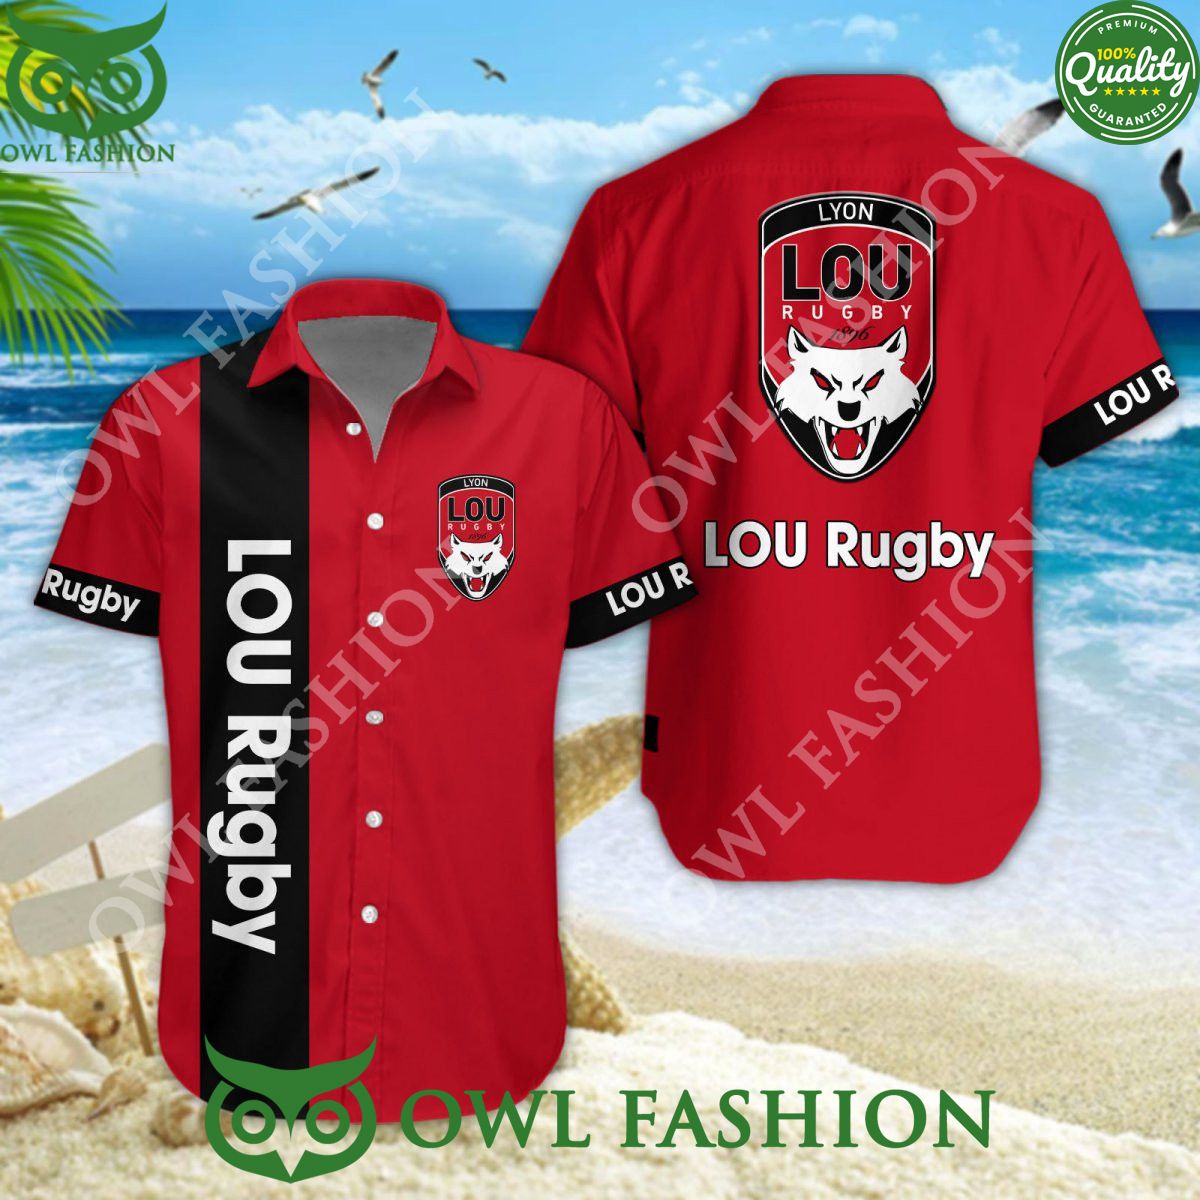 Lyon OU Union Team Rugby Hawaiian Shirt Top 14 My friend and partner